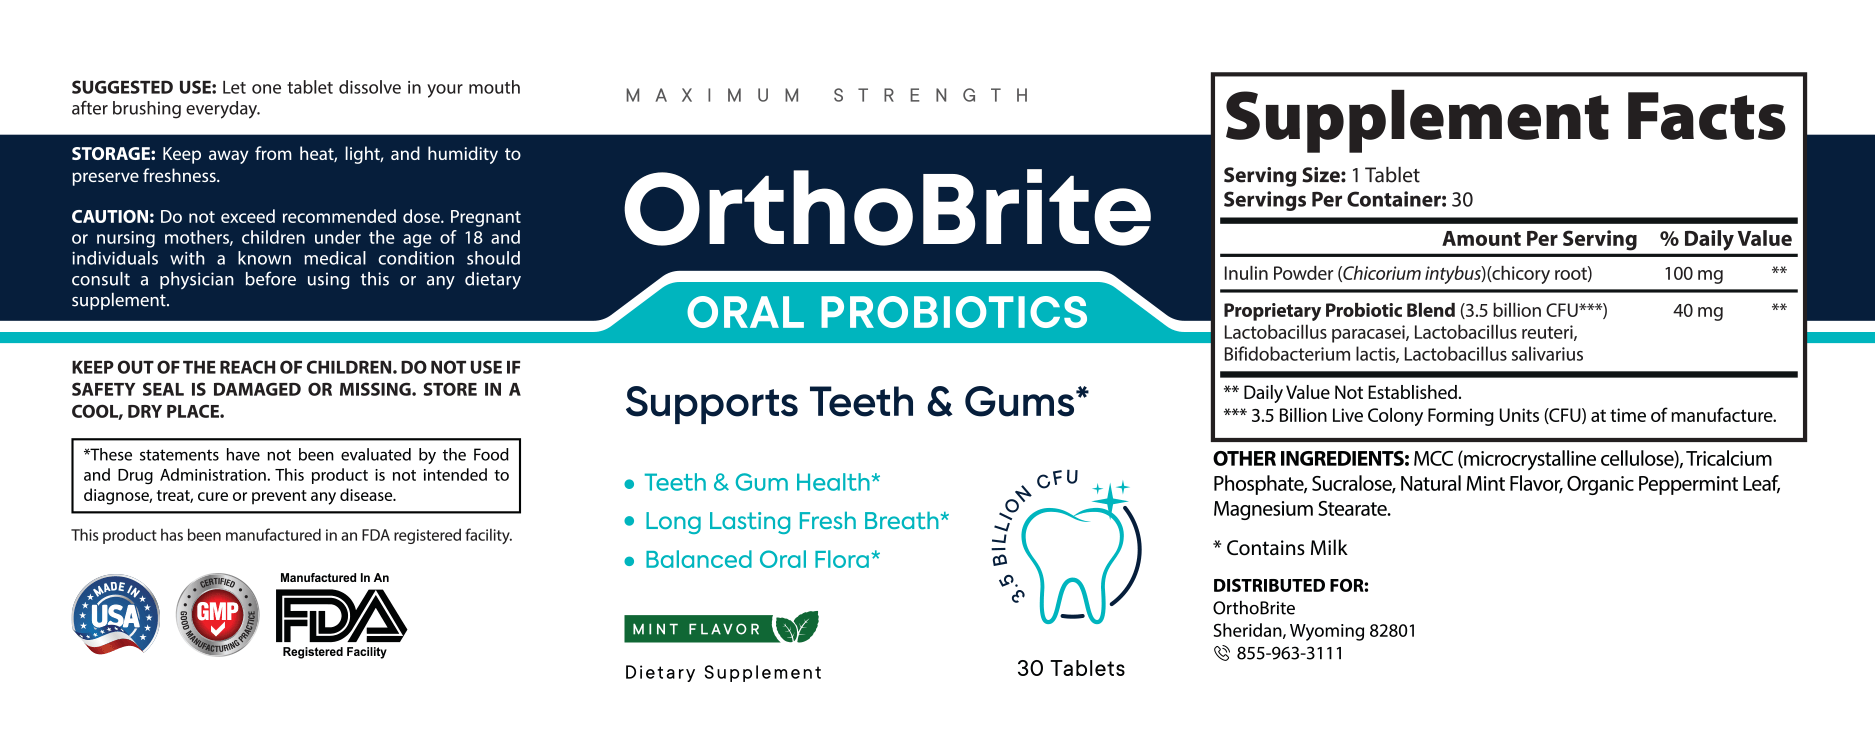 OrthoBrite Supplement Fact